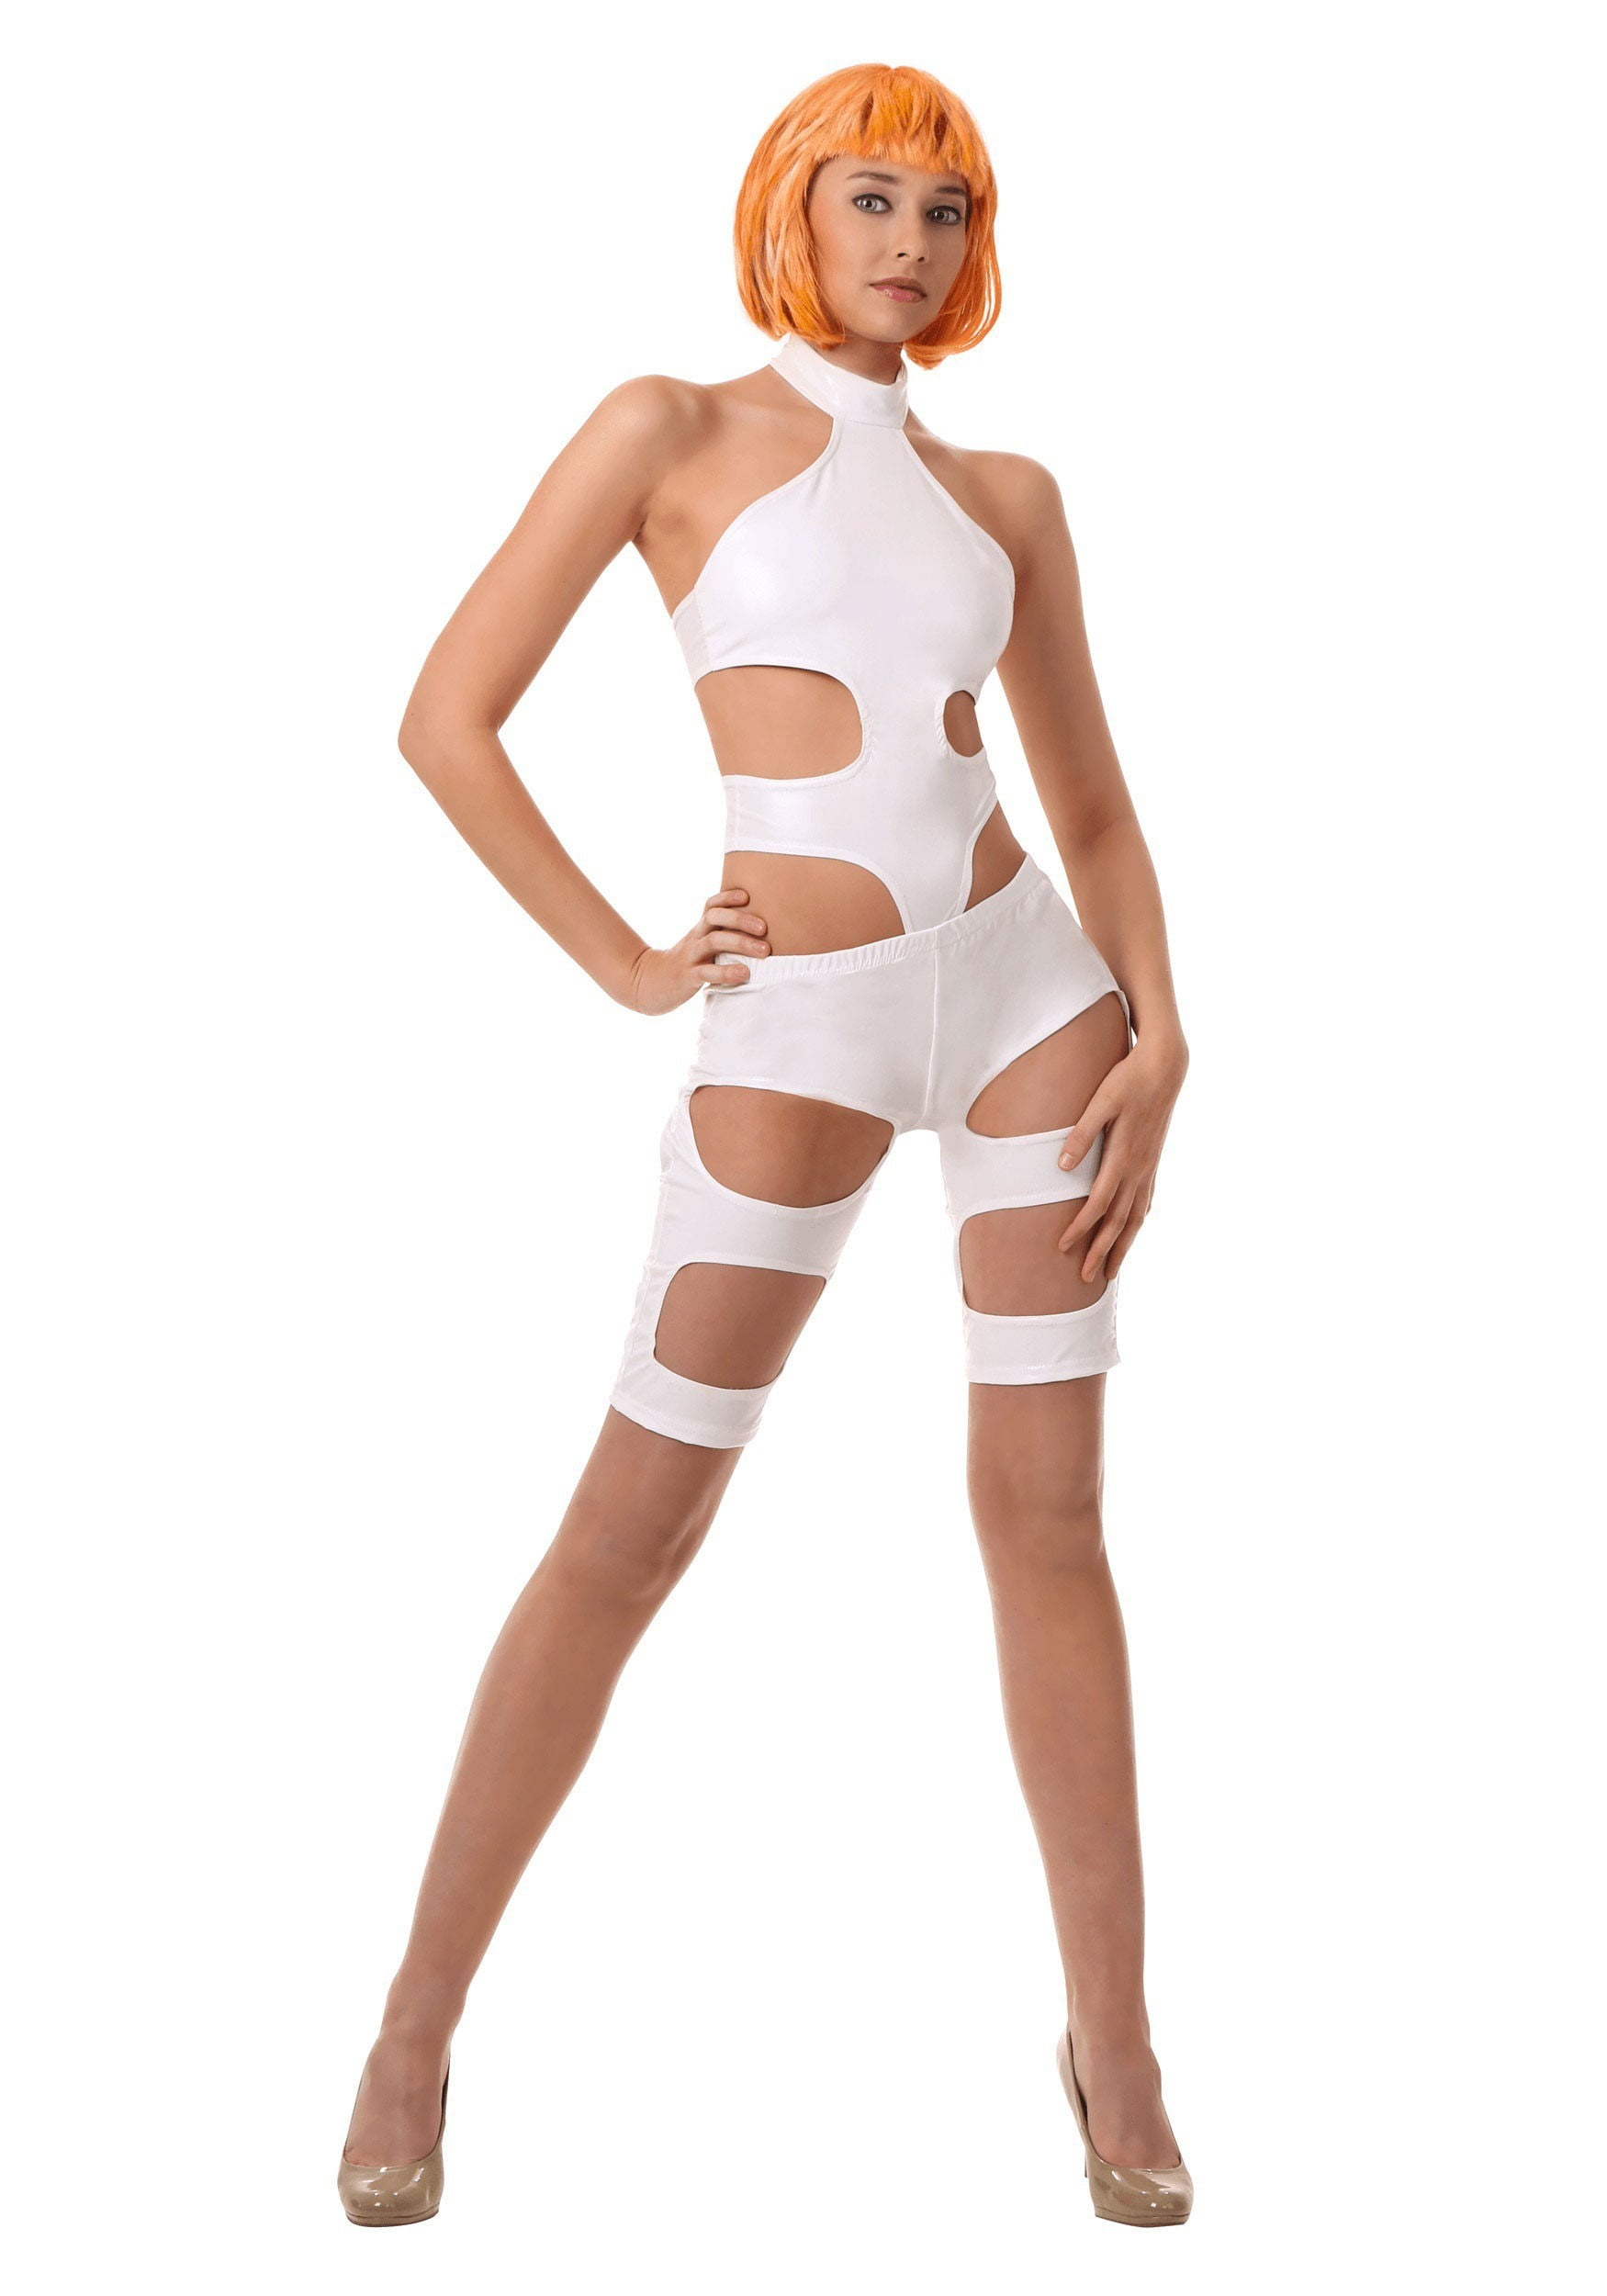 Buy 5th Element Leeloo Thermal Bandages Costume at Walmart.com. 